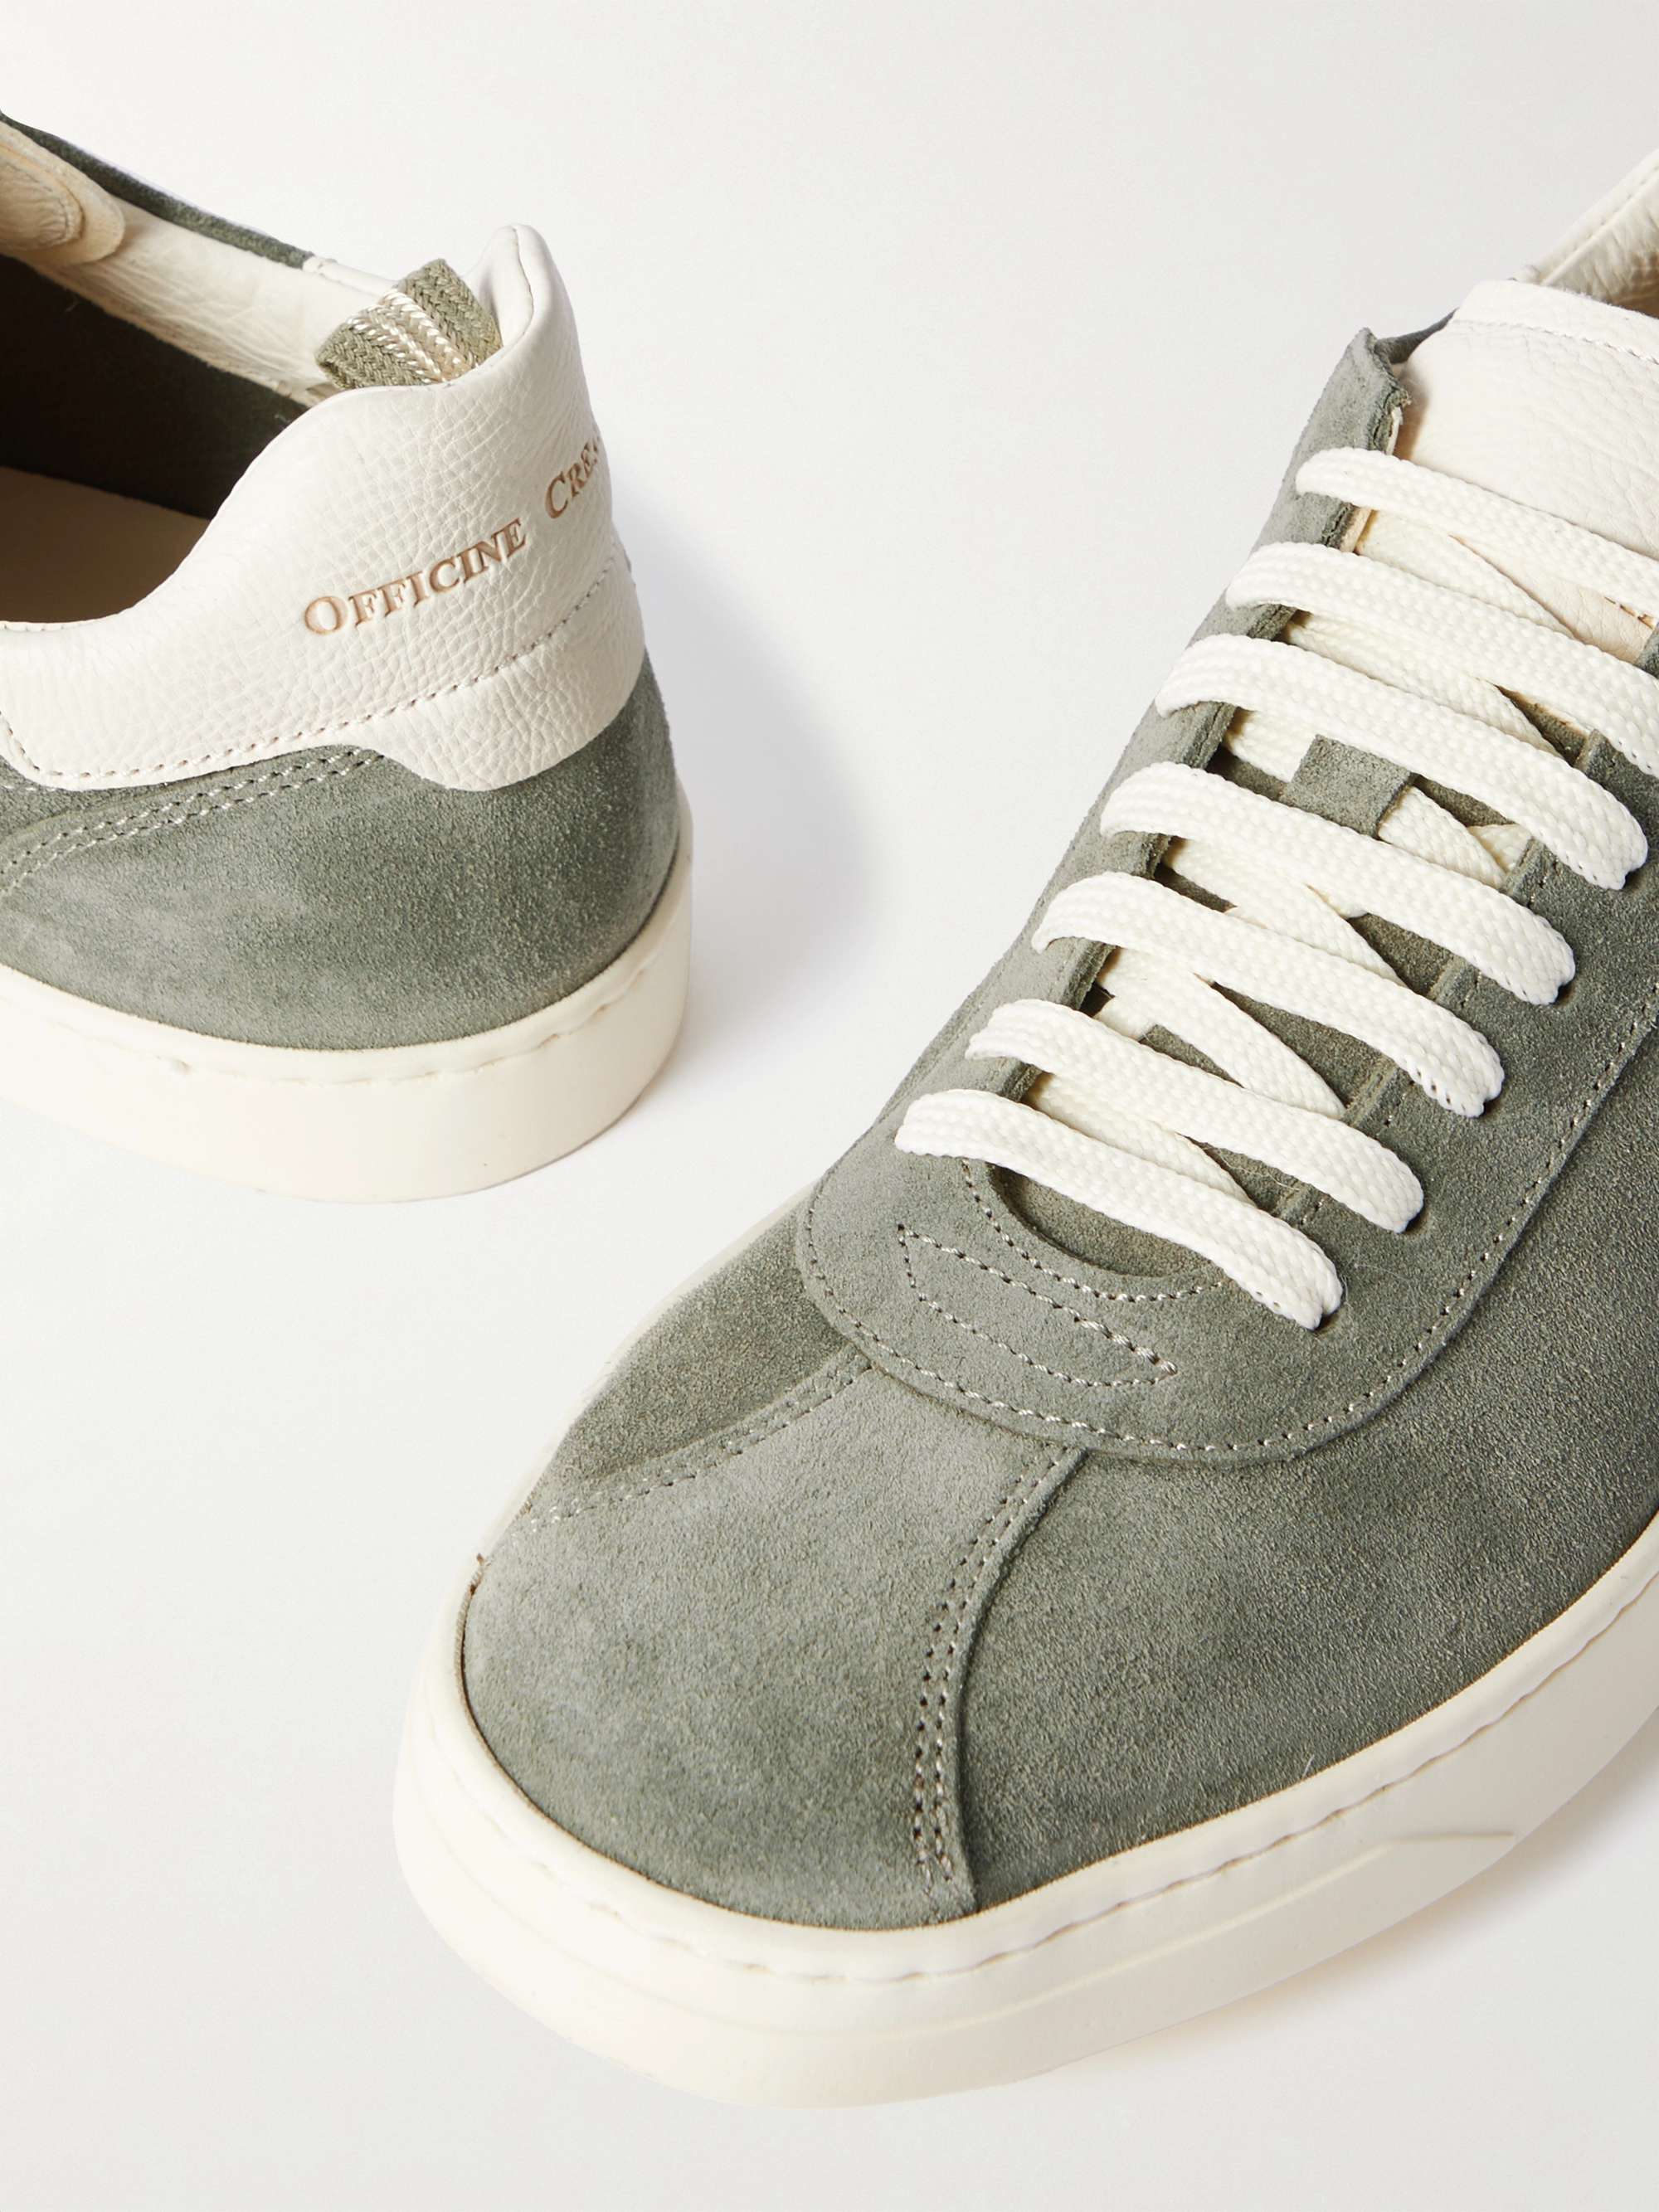 OFFICINE CREATIVE Karma Leather-Trimmed Suede Sneakers for Men | MR PORTER